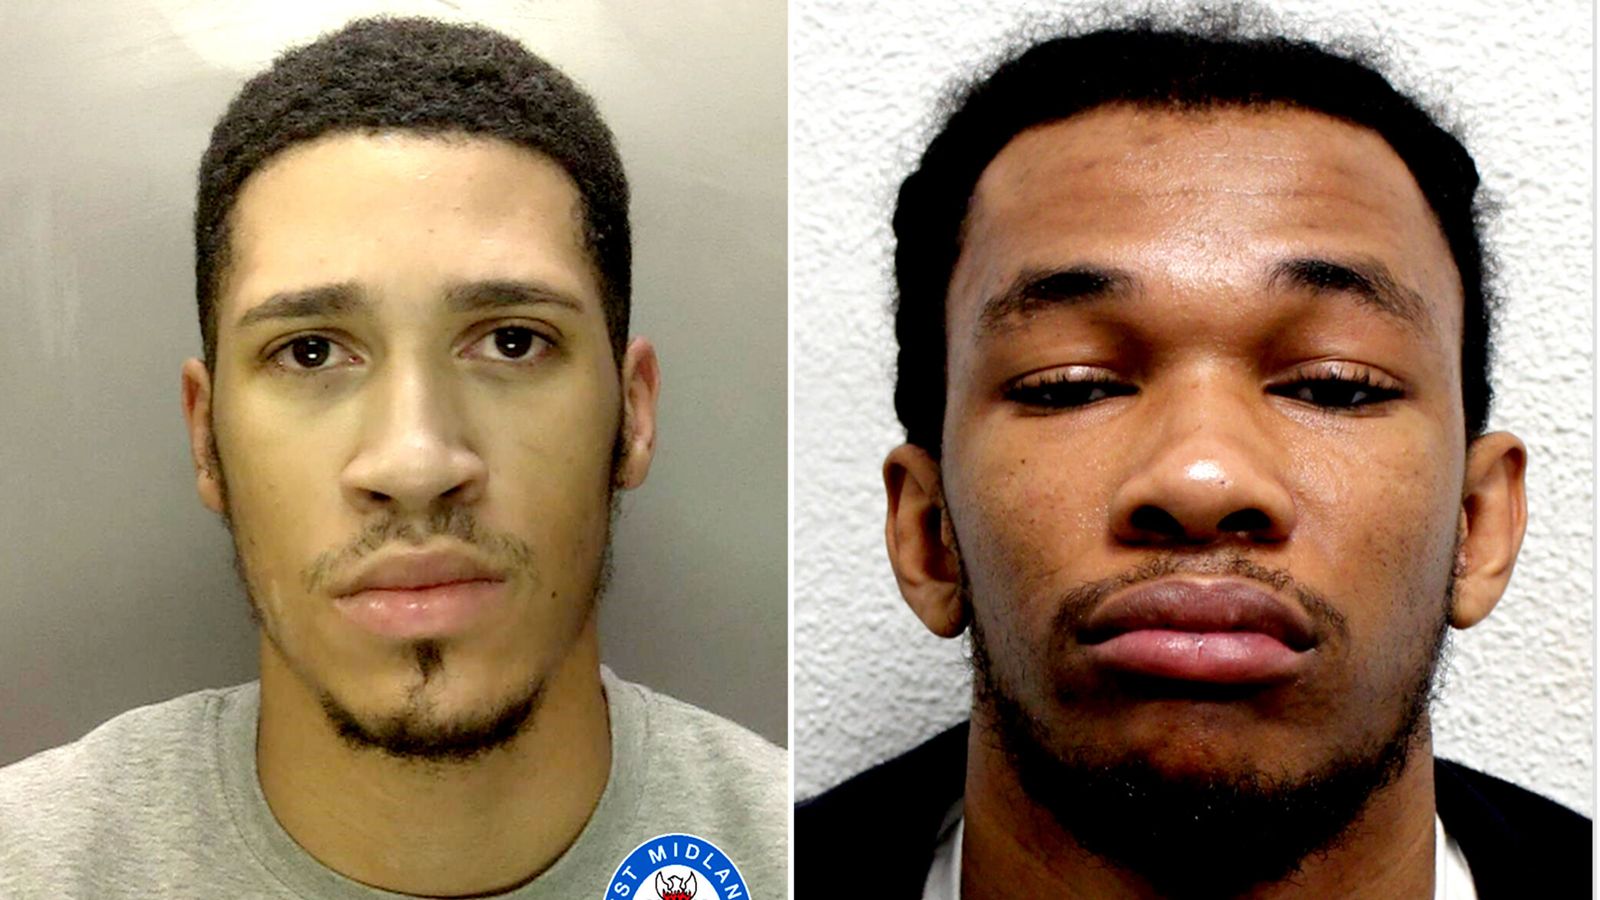 Birmingham stabbing verdict: Two men found guilty of murdering footballer Cody Fisher at Crane nightclub